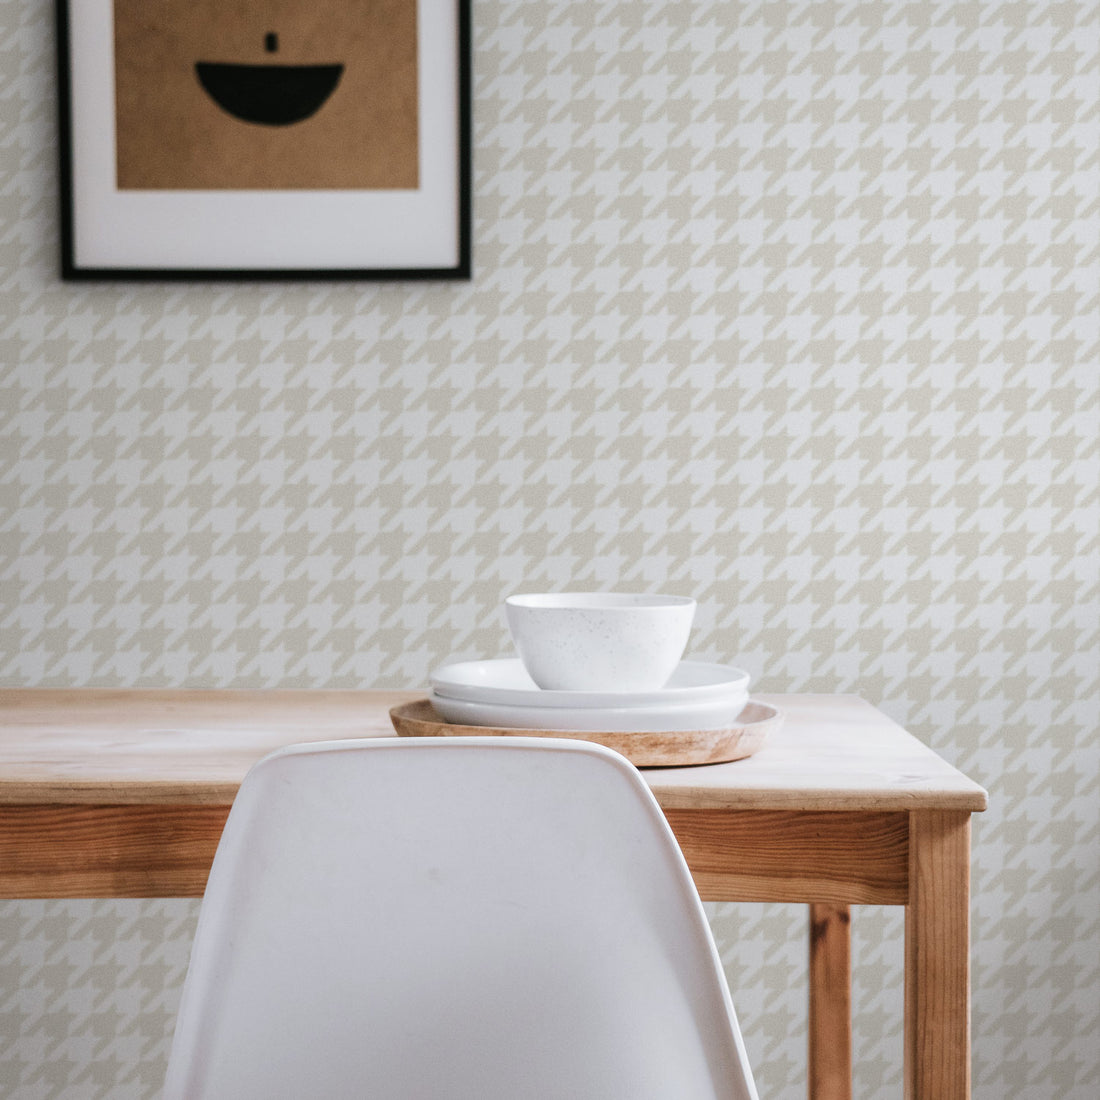 elegant light beige houndstooth wallpaper in dining room